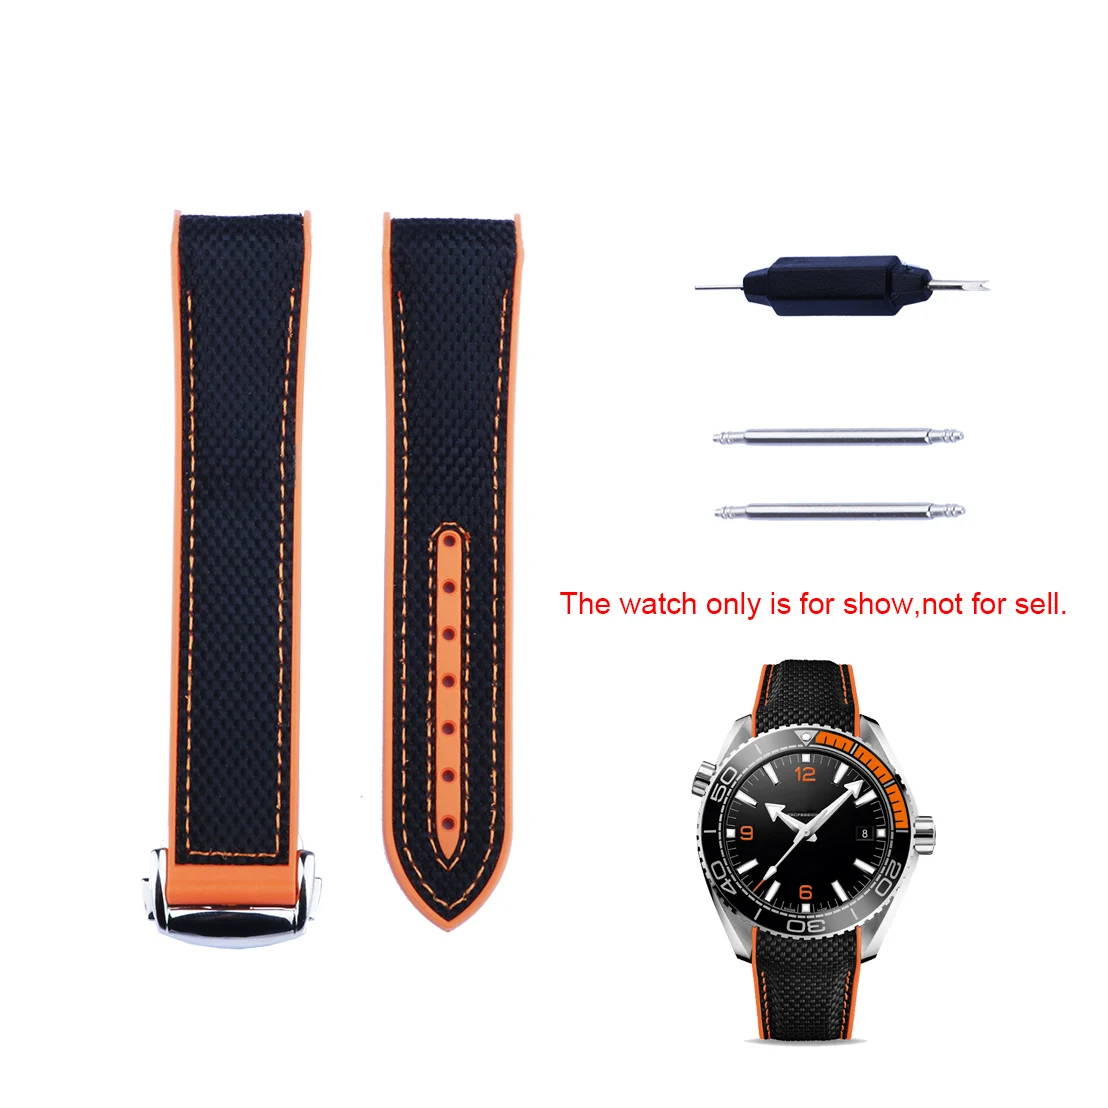 

CARLYWET 20 21 22mm Black Orange Rubber Watch Band Strap For Omega Seamaster Planet Ocean 300m 600m 43.5mm/ 600m 45.5mm